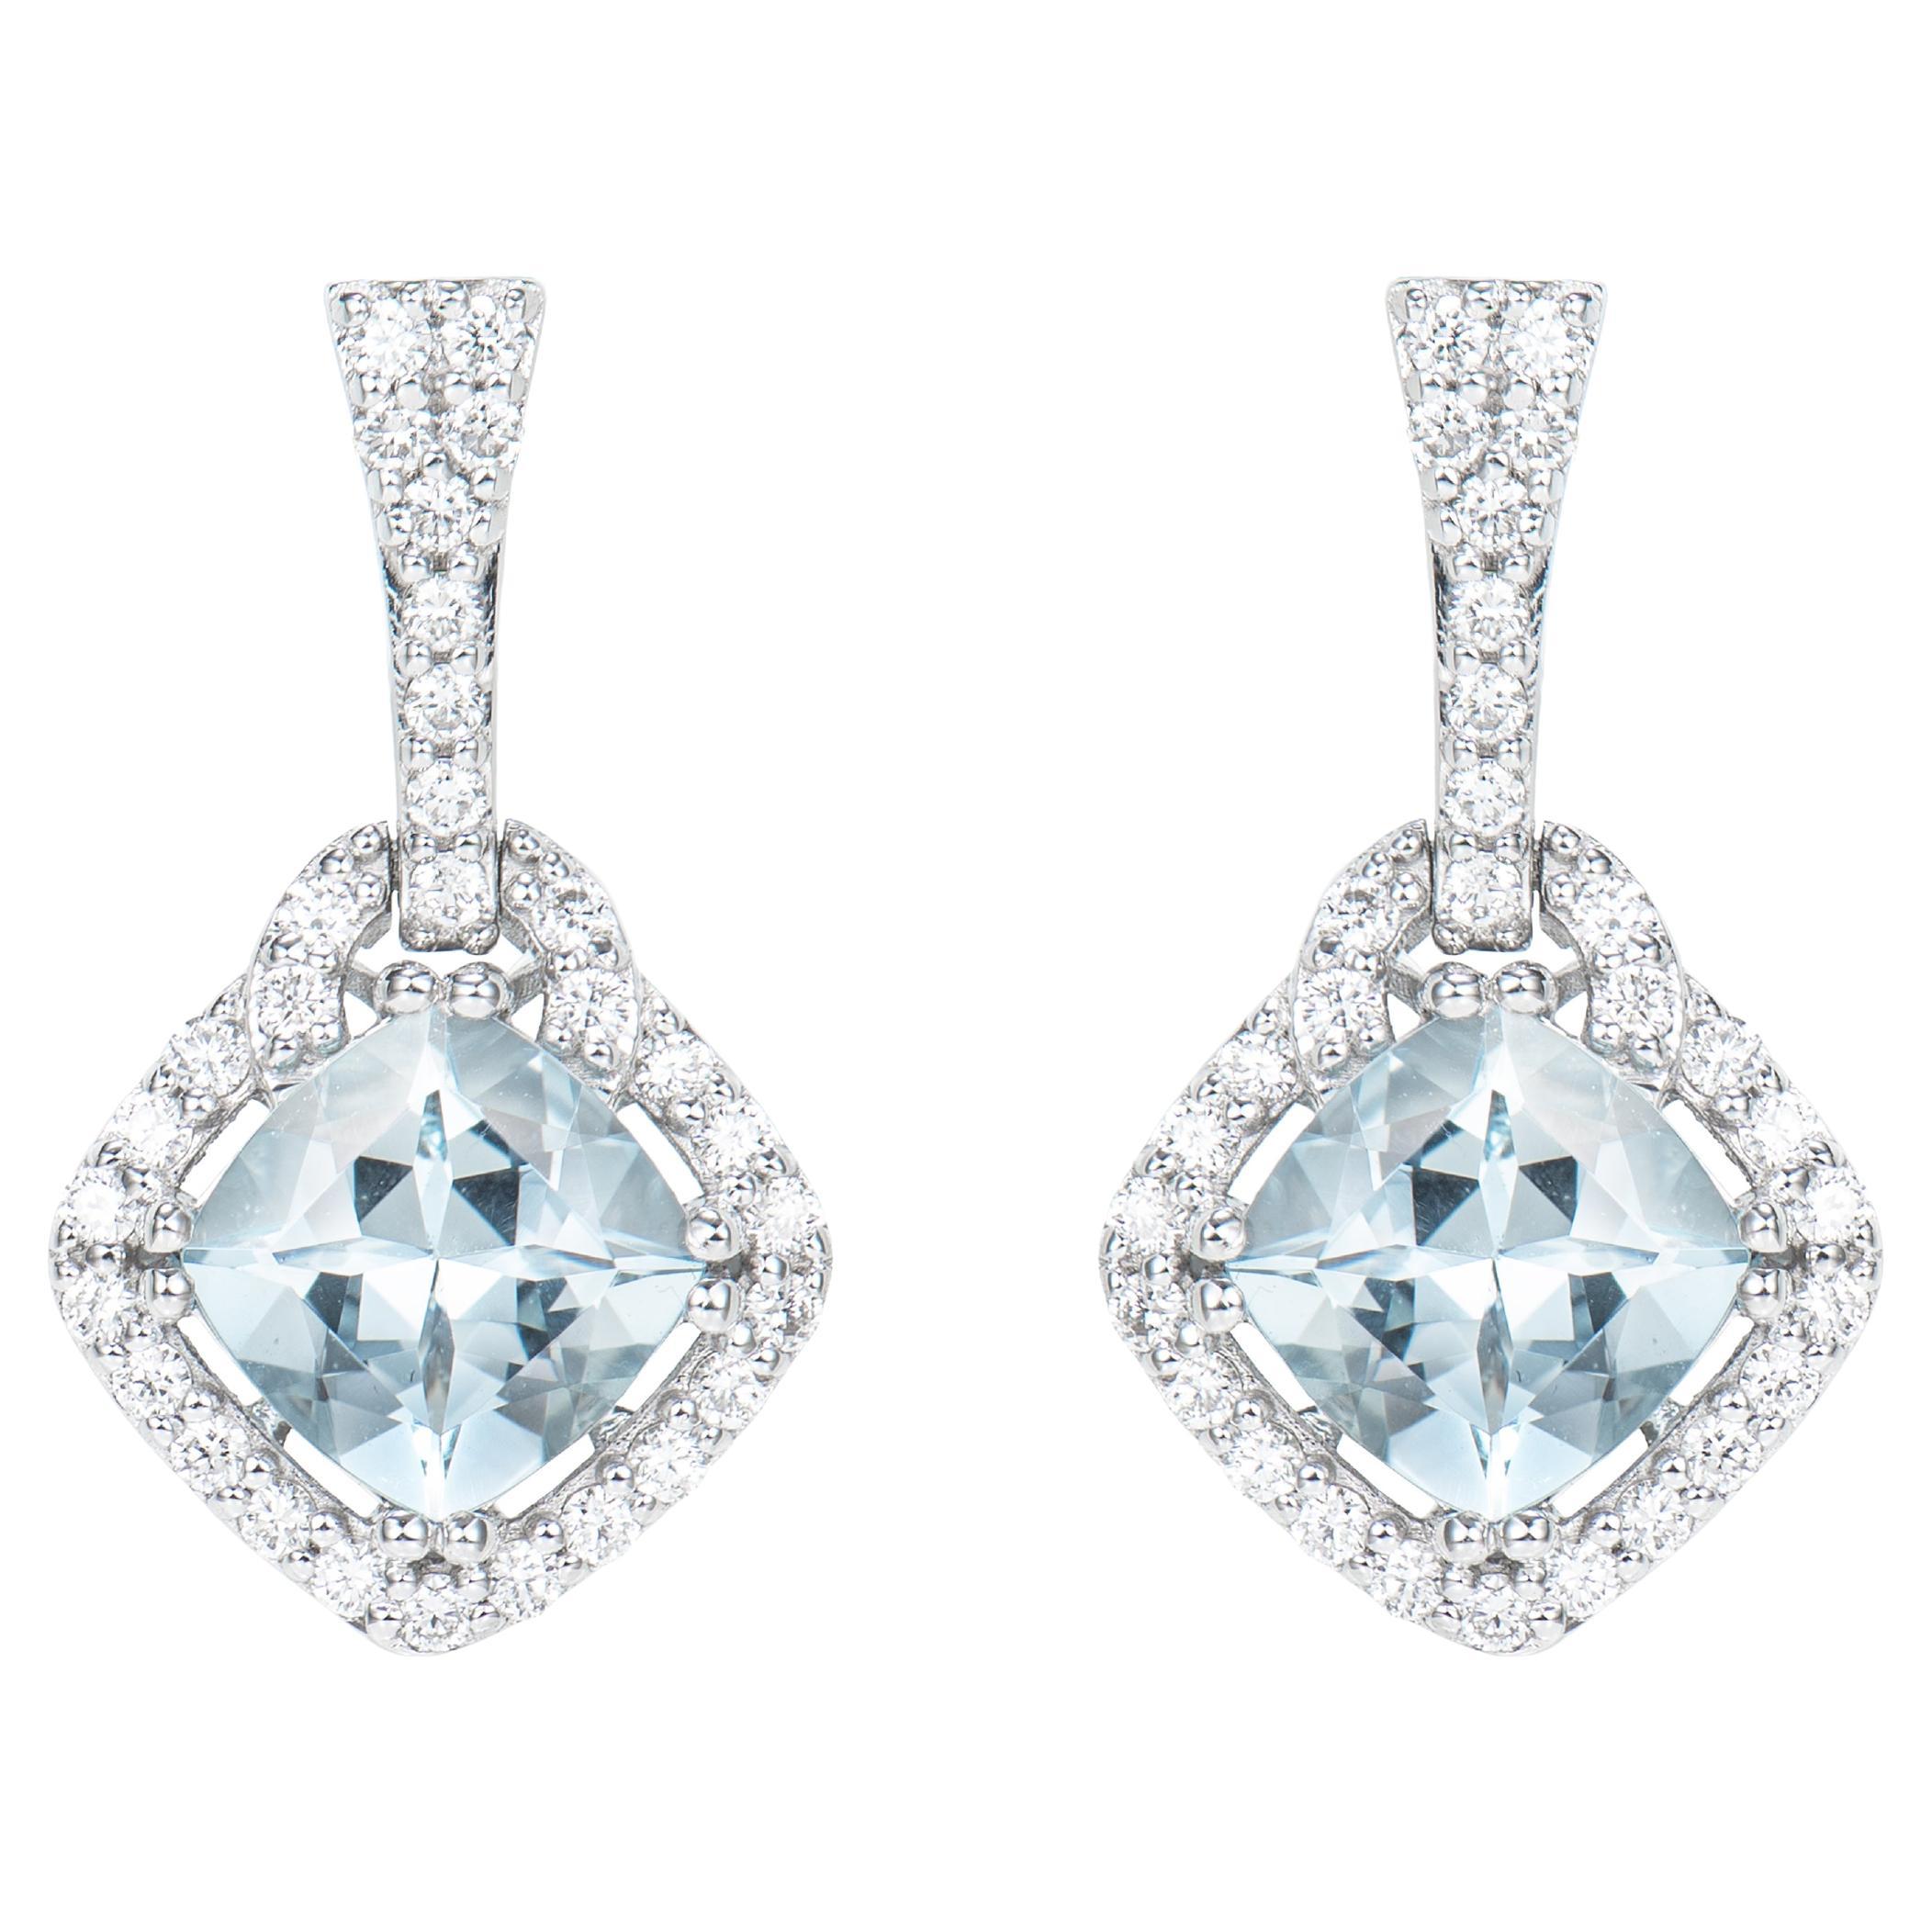 2.37 Carat Aquamarine Drop Earrings in 18Karat White Gold with Diamond For Sale